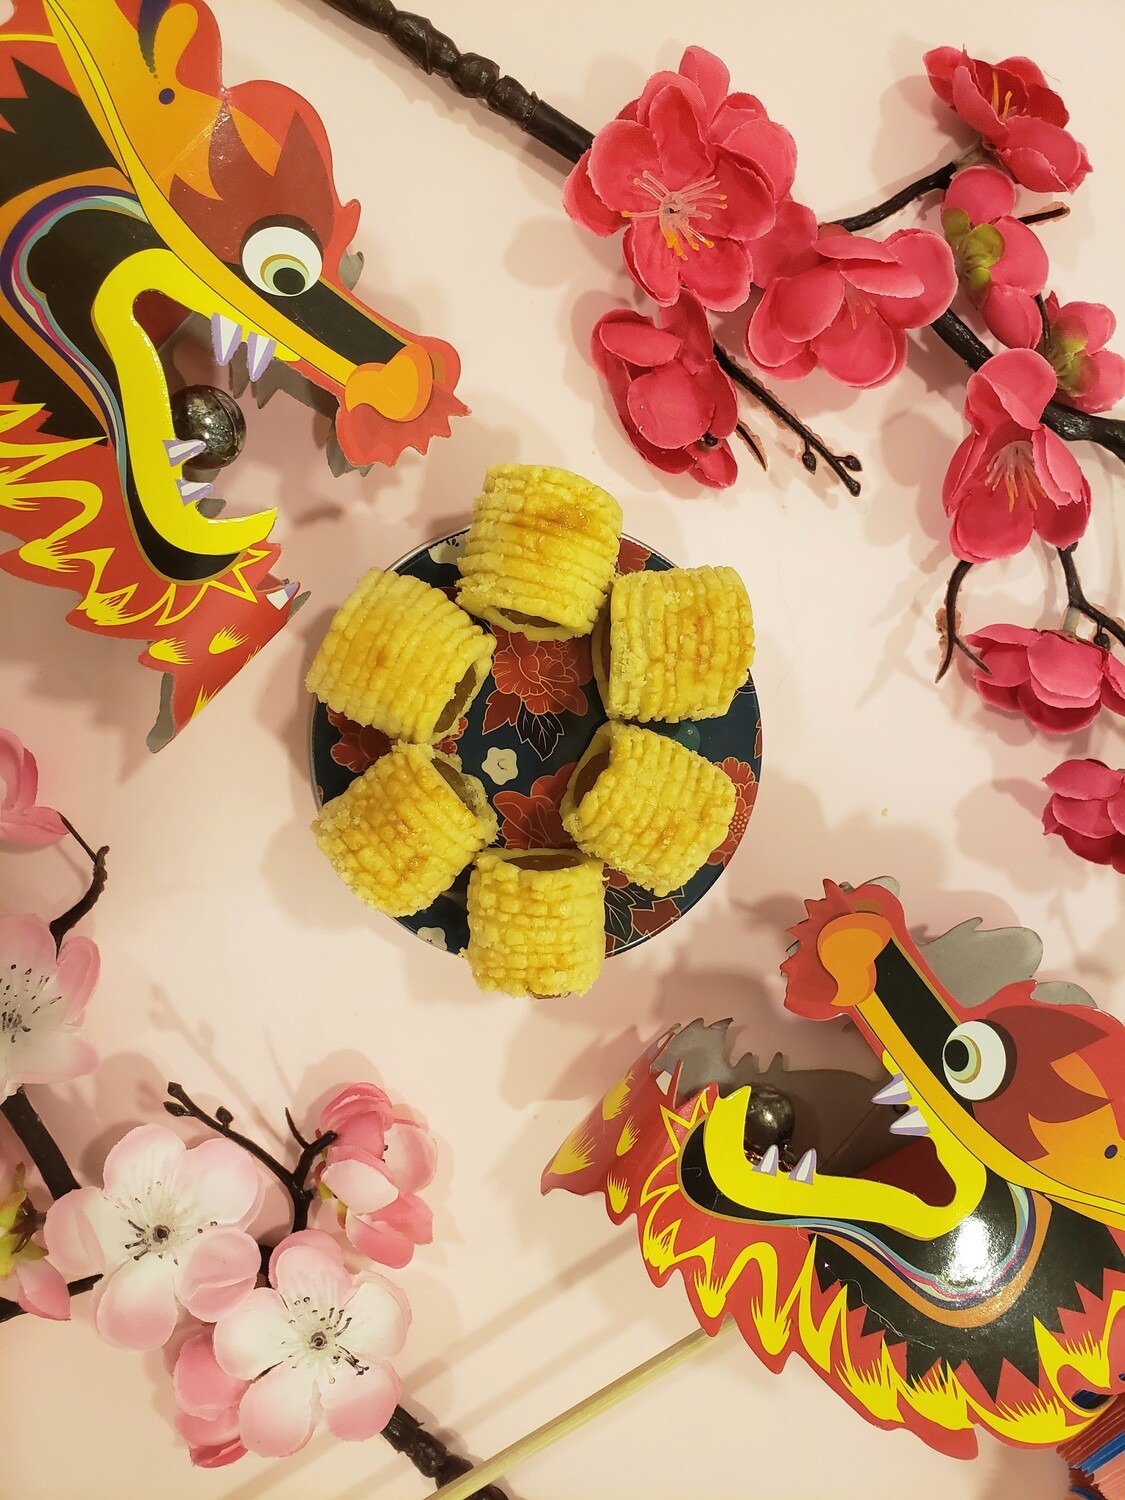 Chinese New Year Cookies: Pineapple Tarts